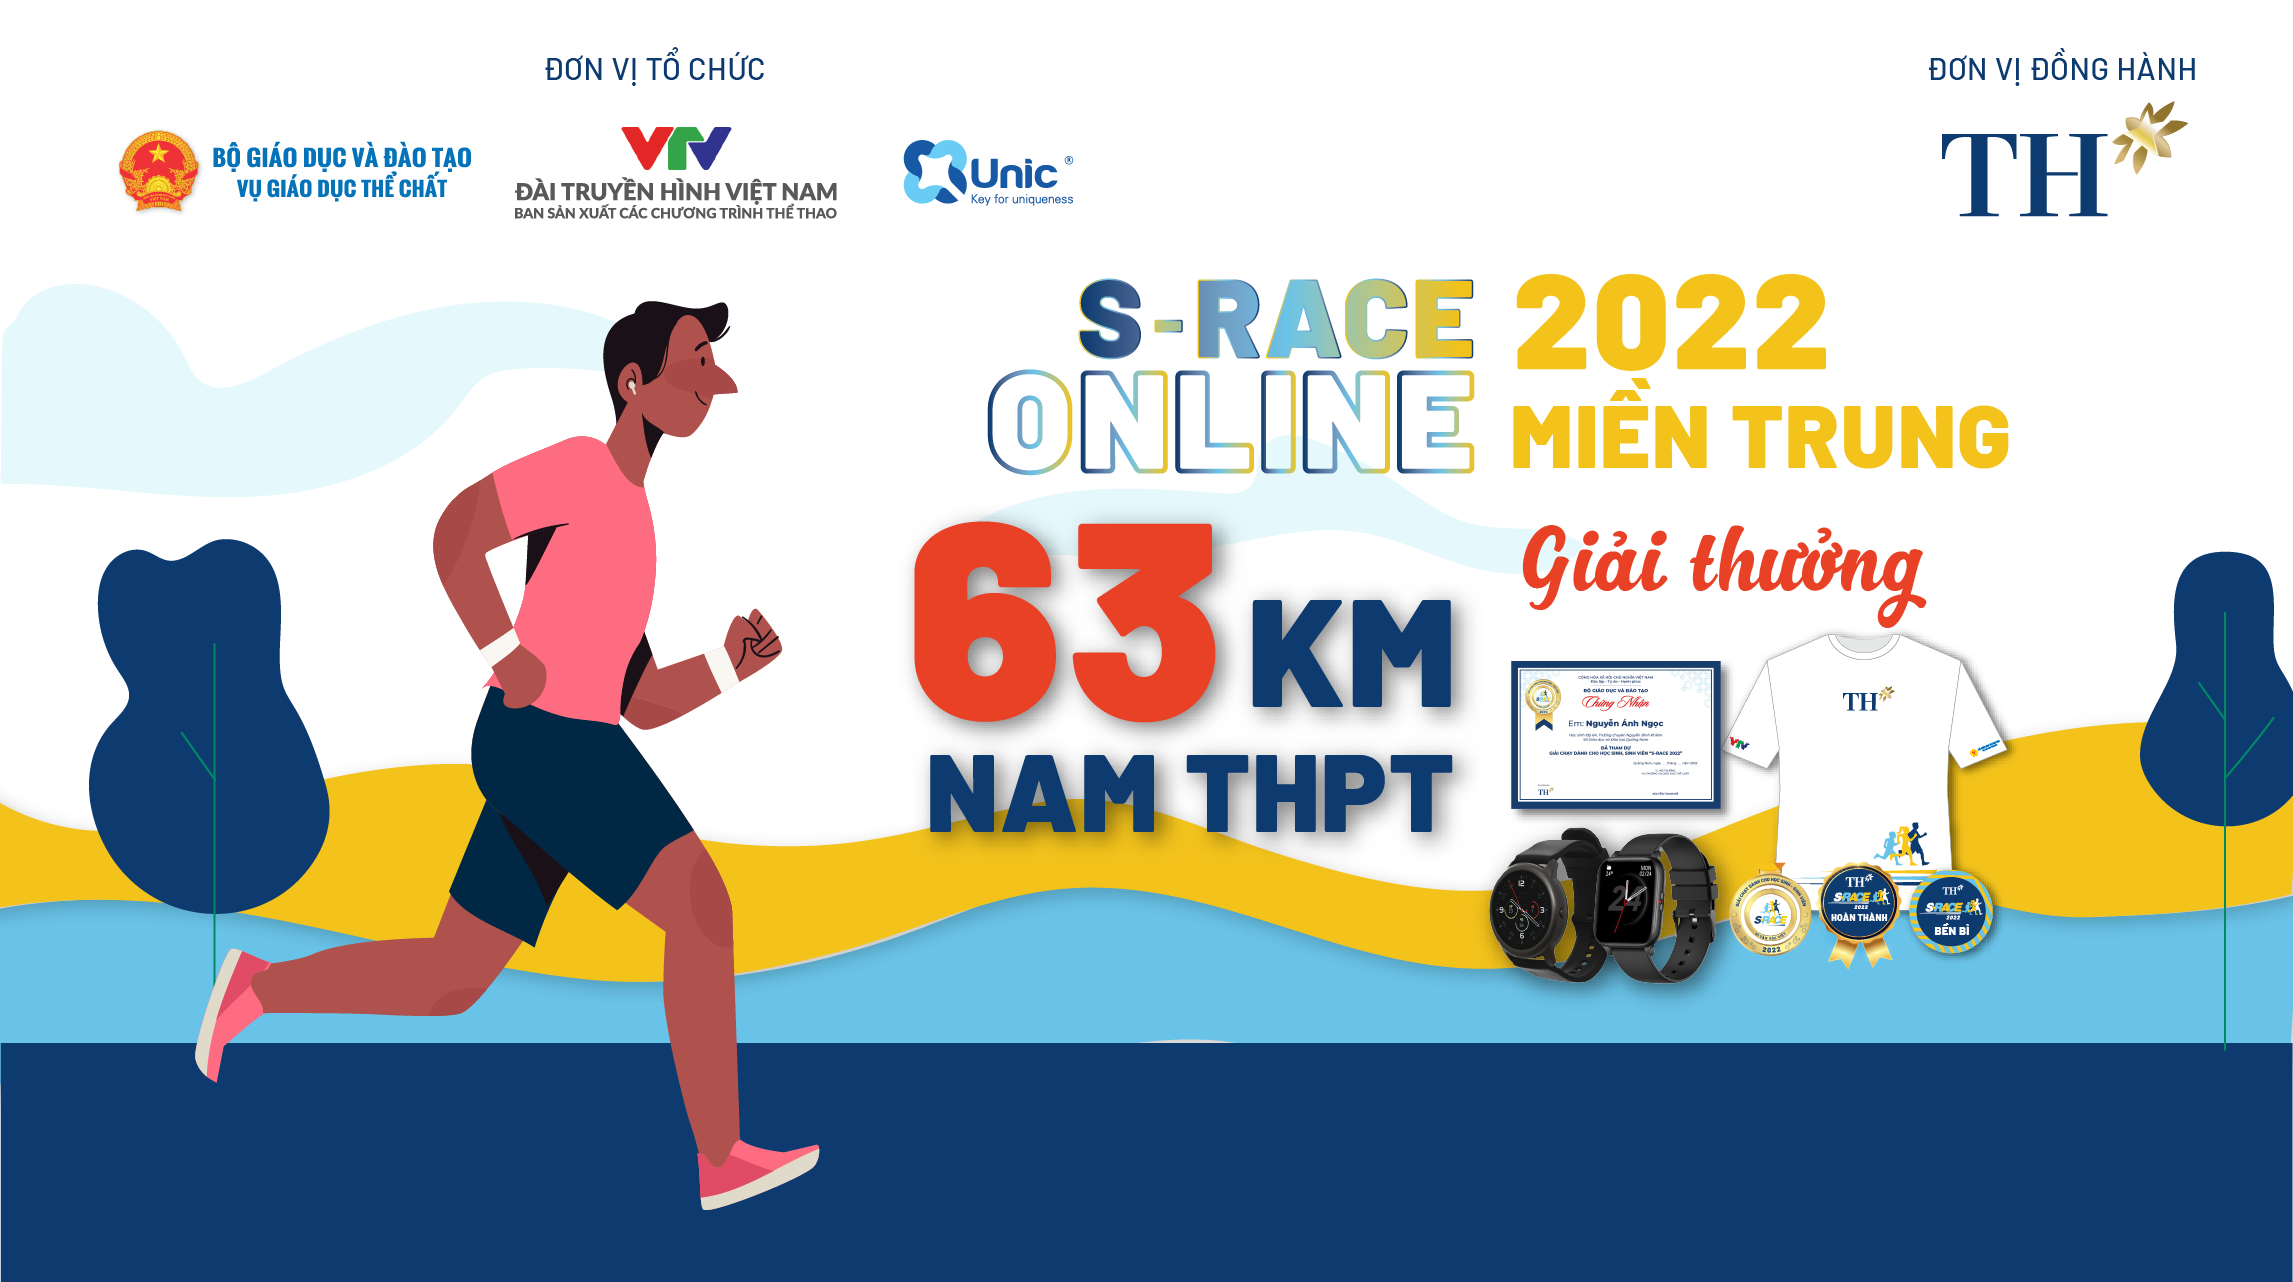 63 KM NAM THPT (S-Race Online miền Trung)